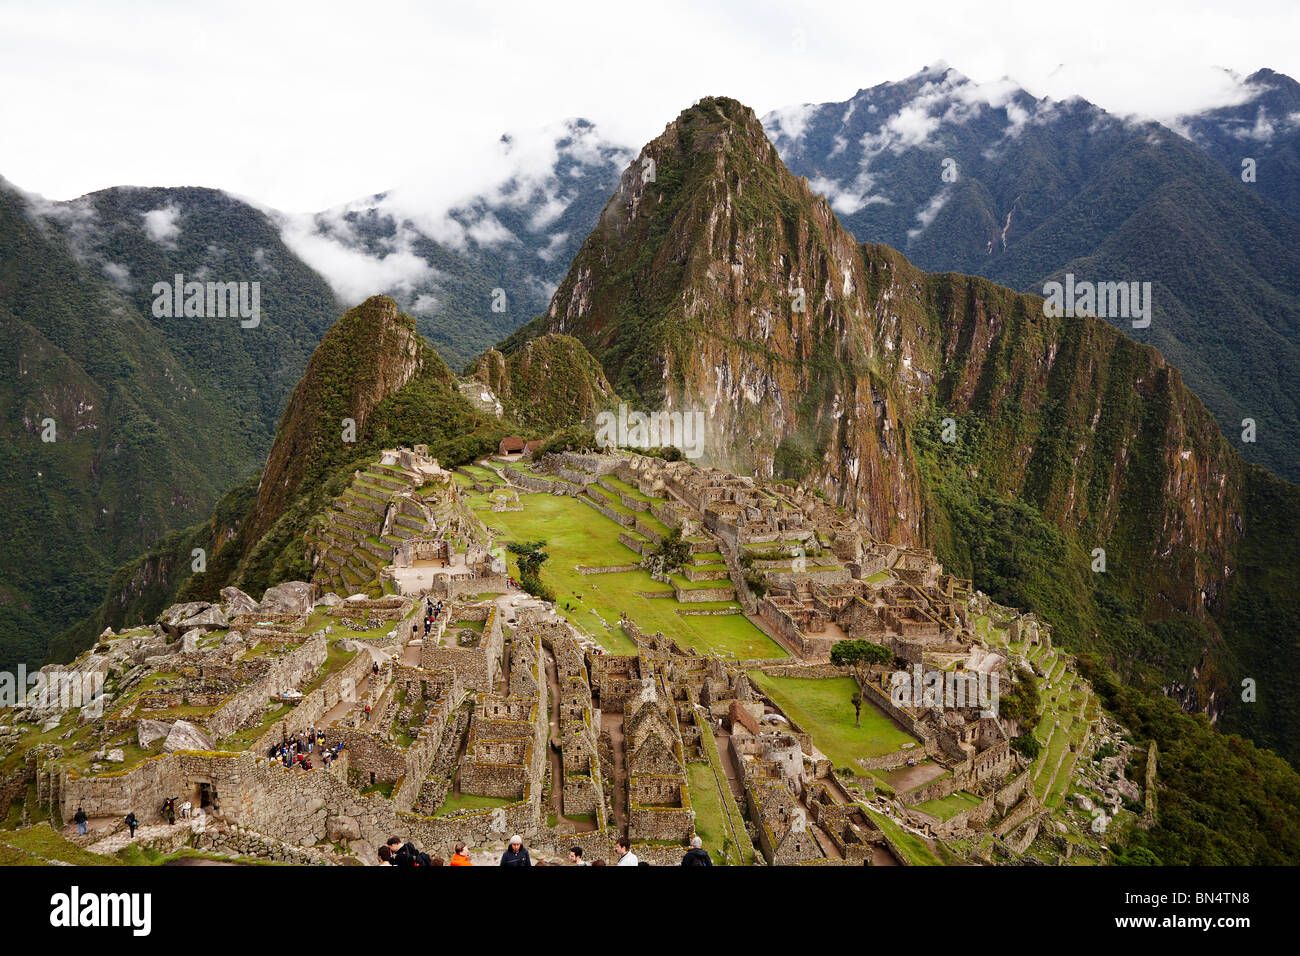 The Inca settlement of Machu Picchu, Peru. Stock Photo